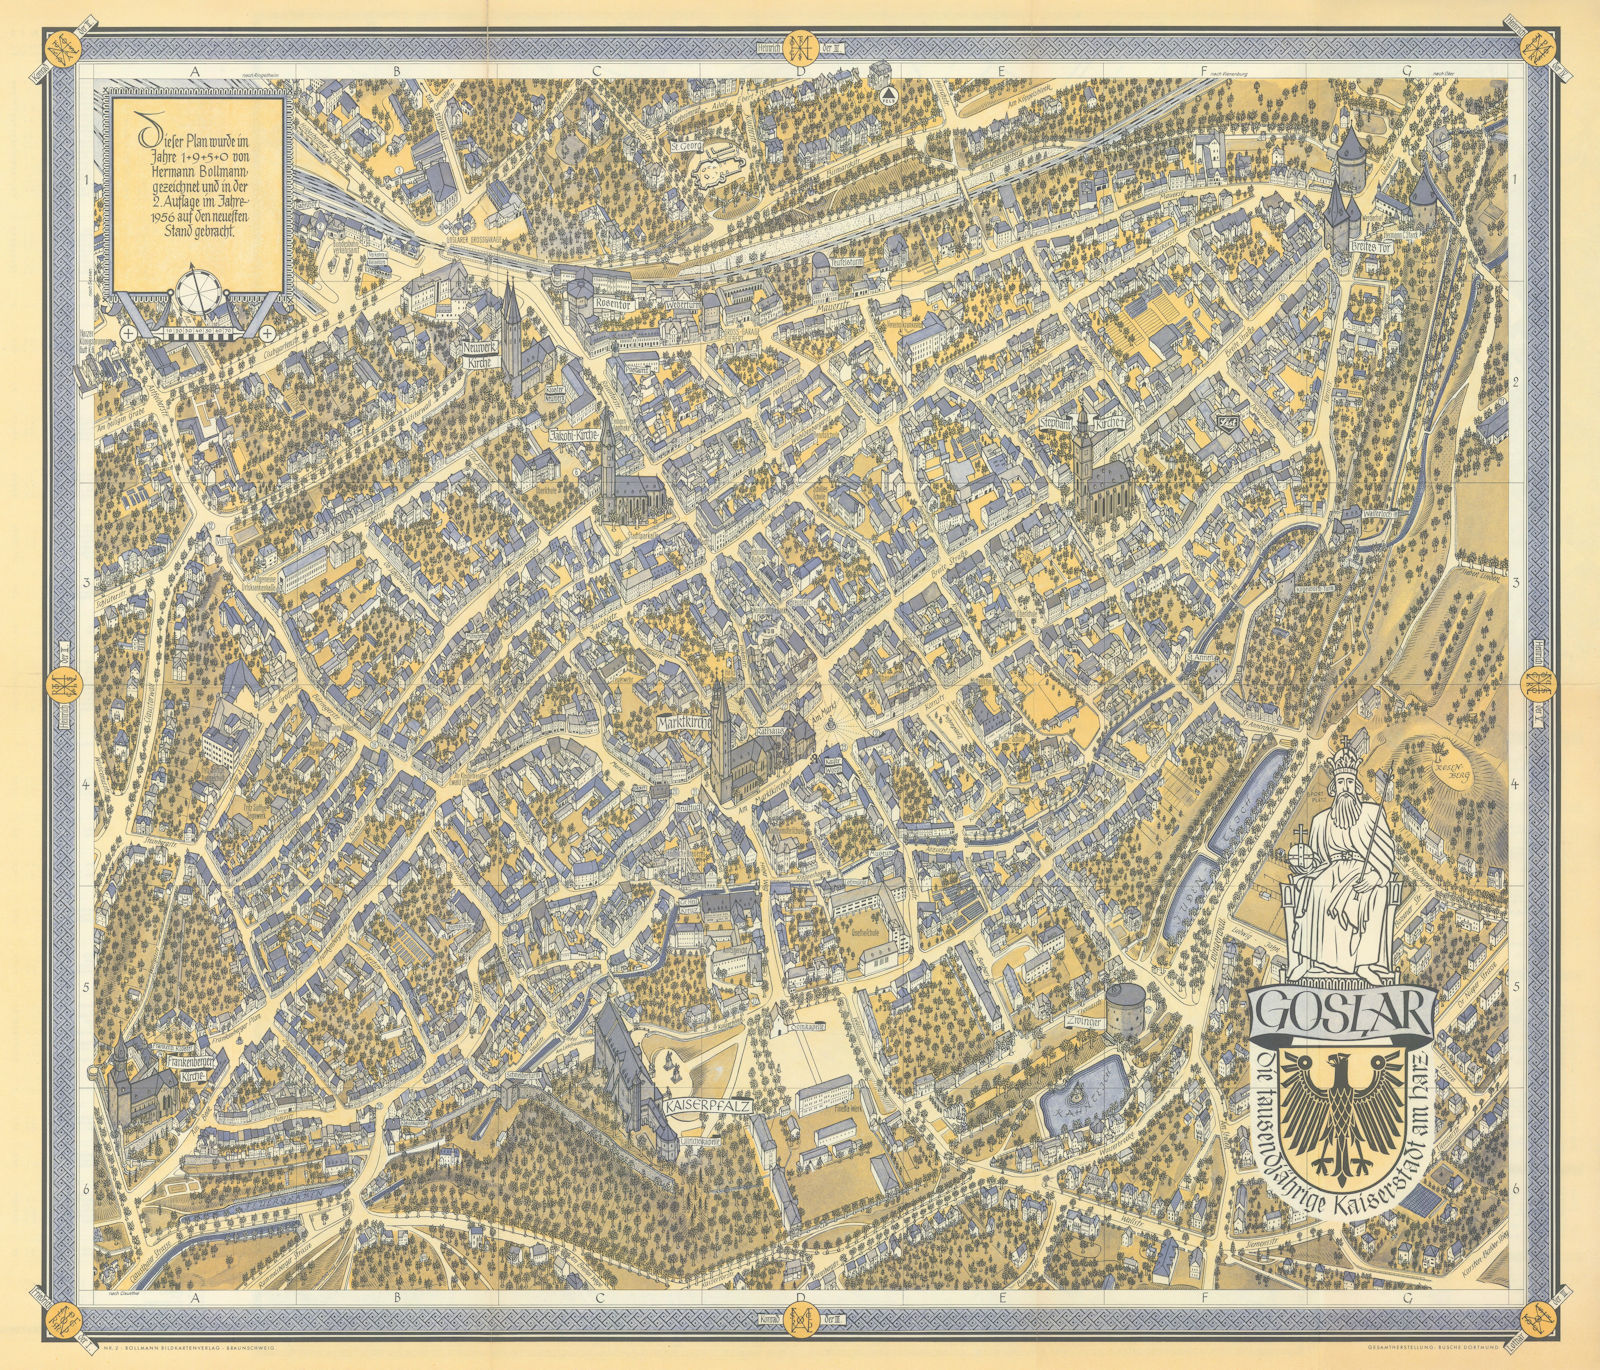 Associate Product Goslar pictorial bird's eye view city plan #2 by Hermann Bollmann 1956 old map